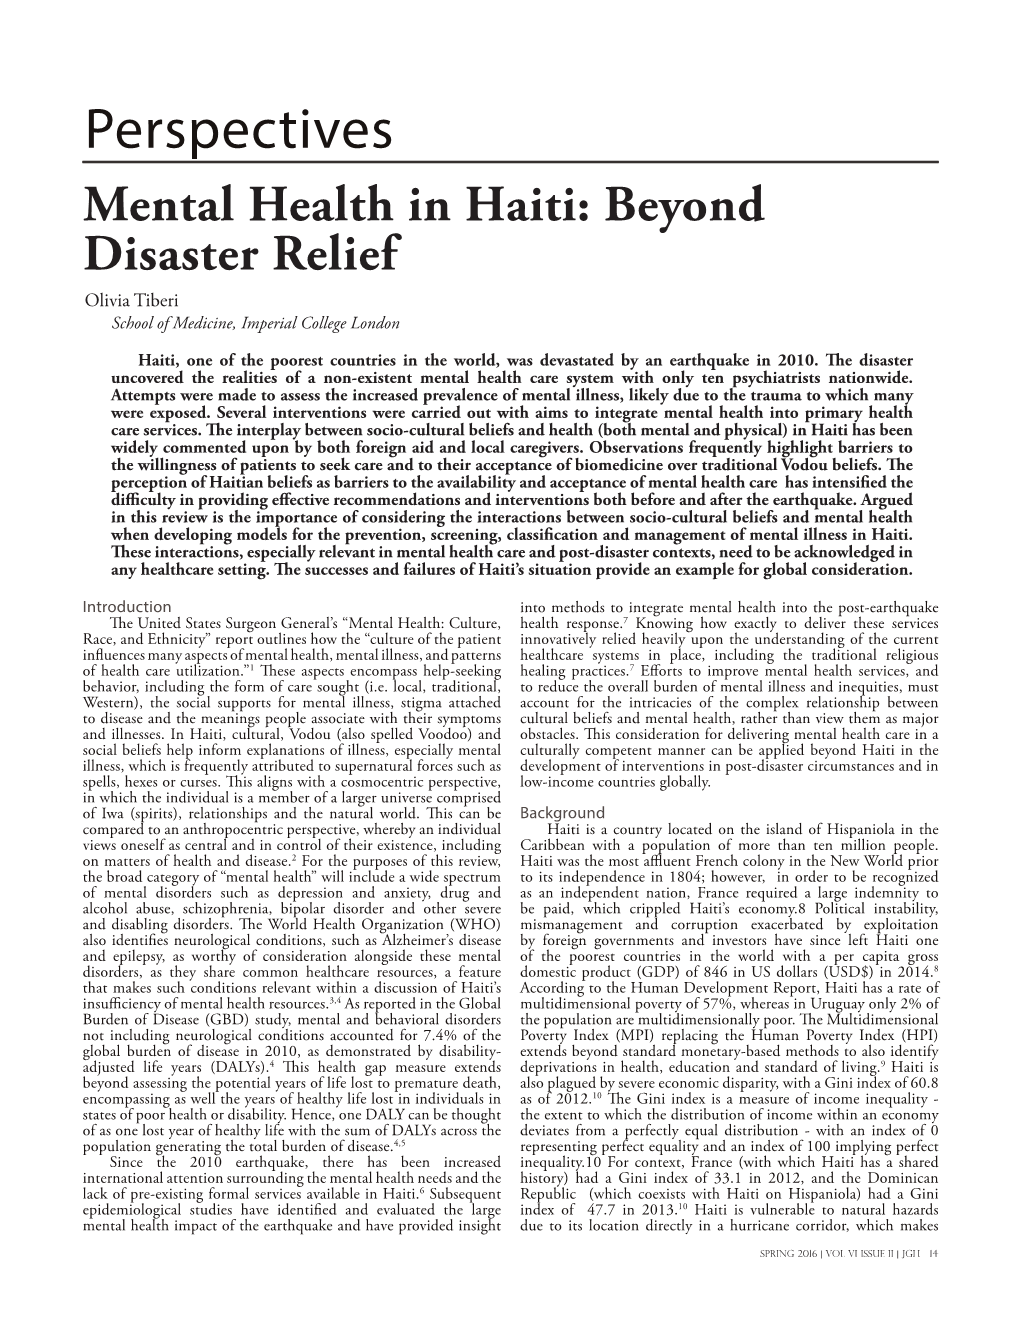 Mental Health in Haiti: Beyond Disaster Relief Olivia Tiberi School of Medicine, Imperial College London